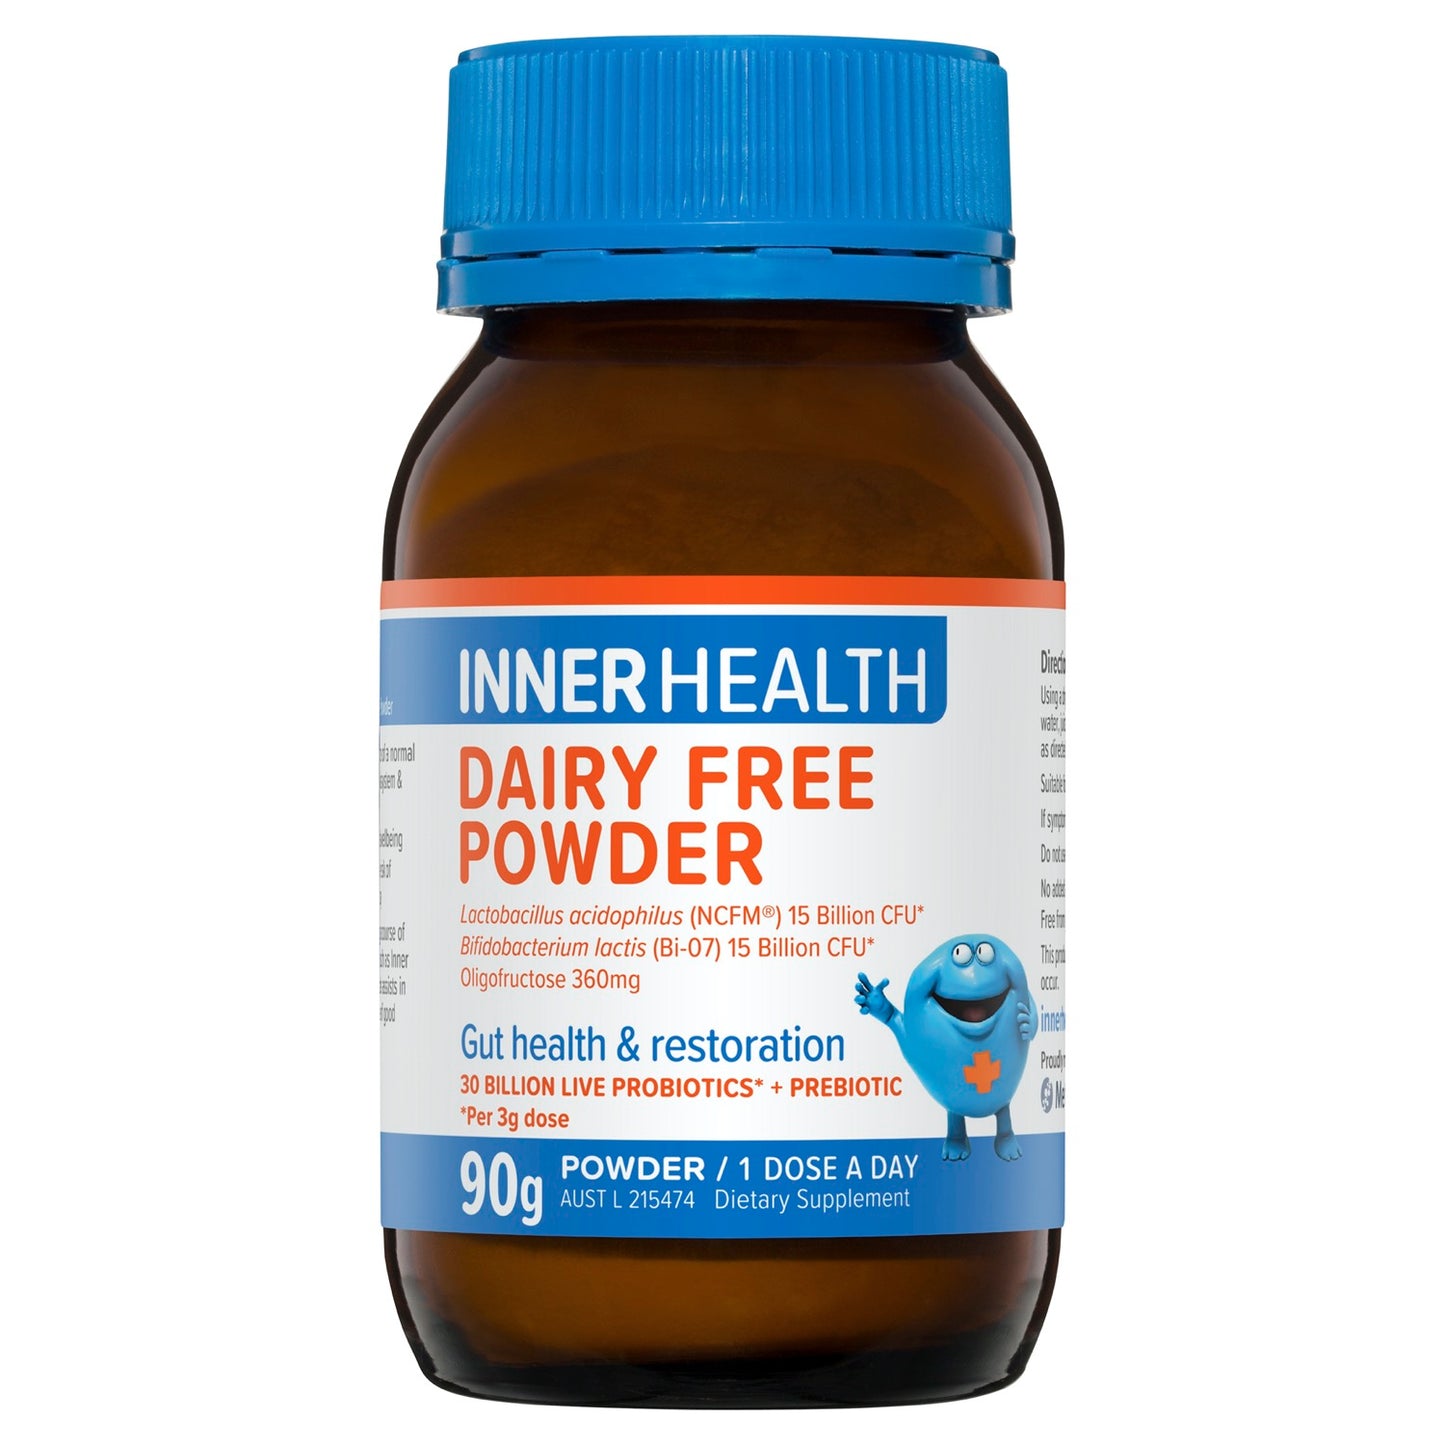 Inner Health Powder Dairy Free Probiotic 90g